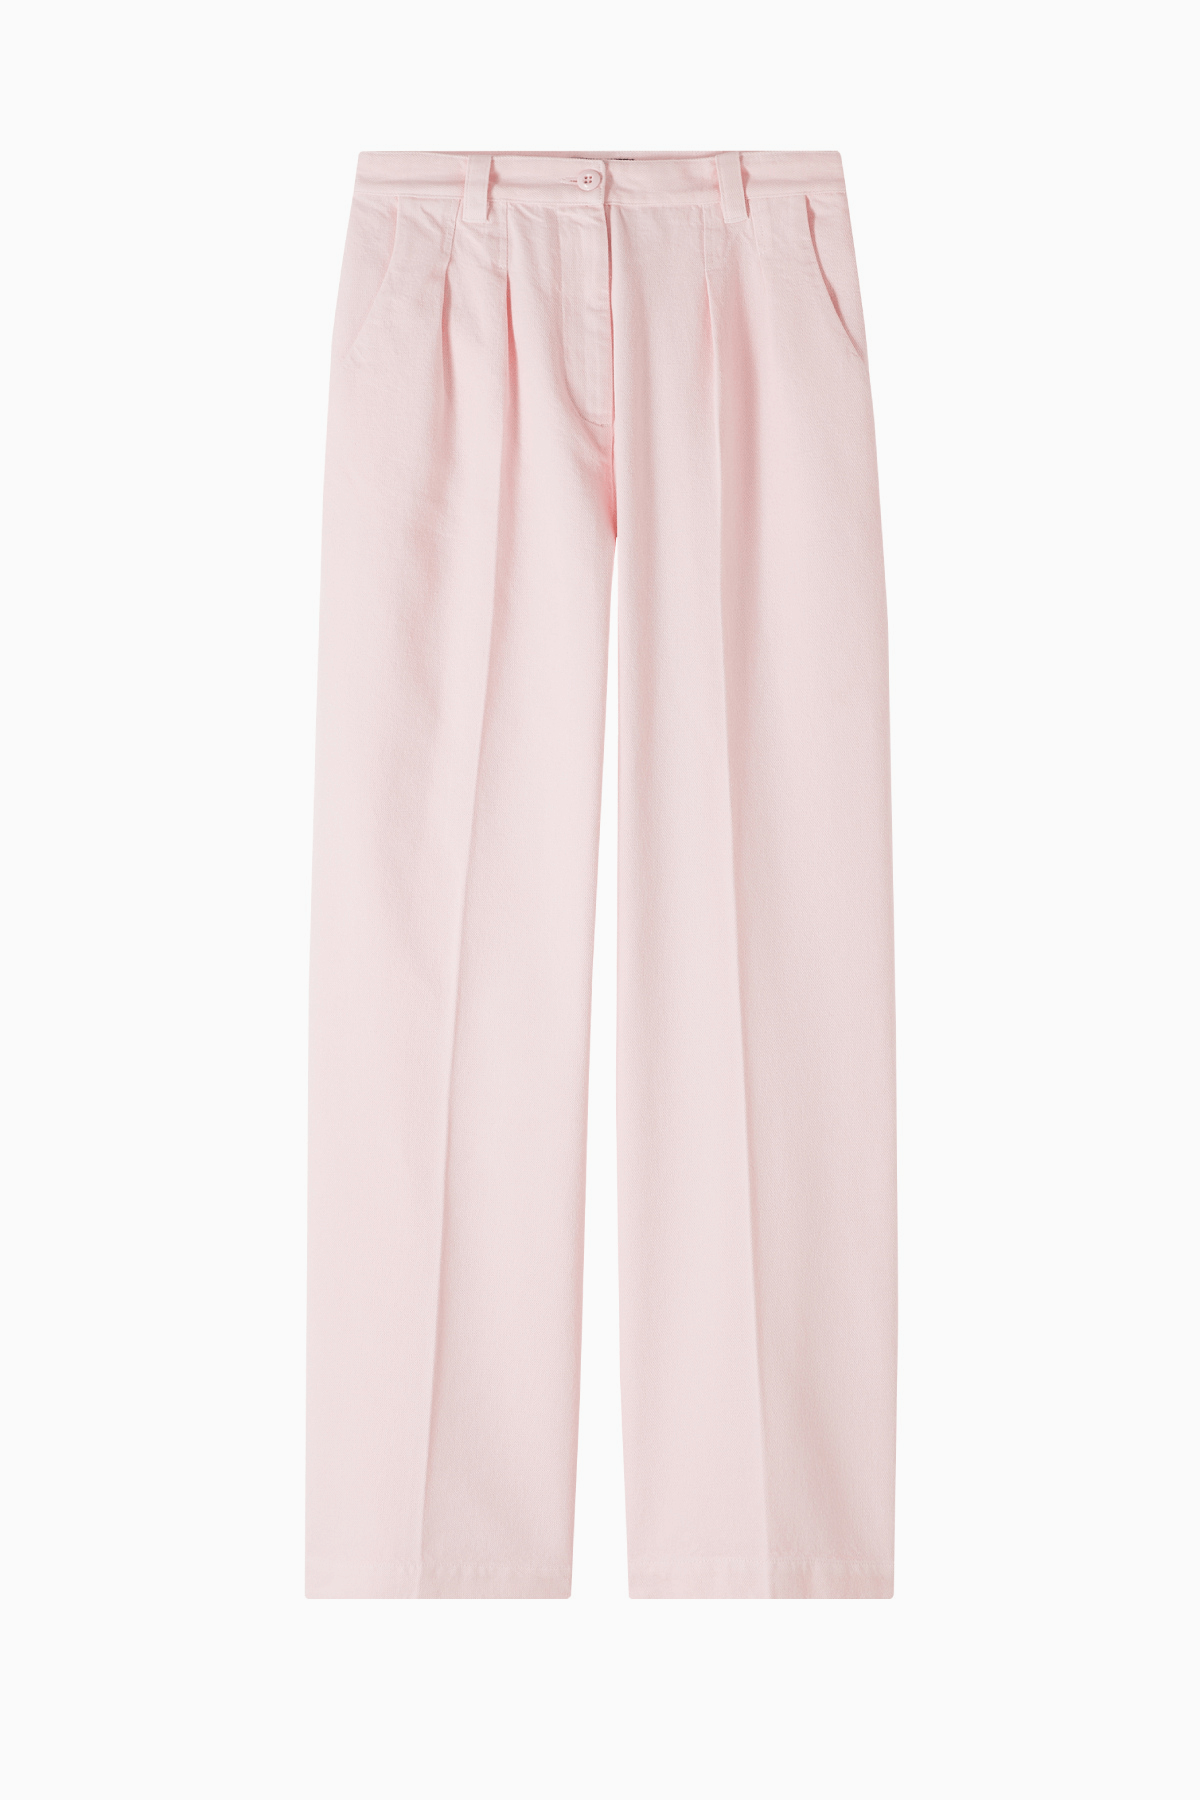 A.P.C. Tressie Organic Cotton Pant - Pale Pink